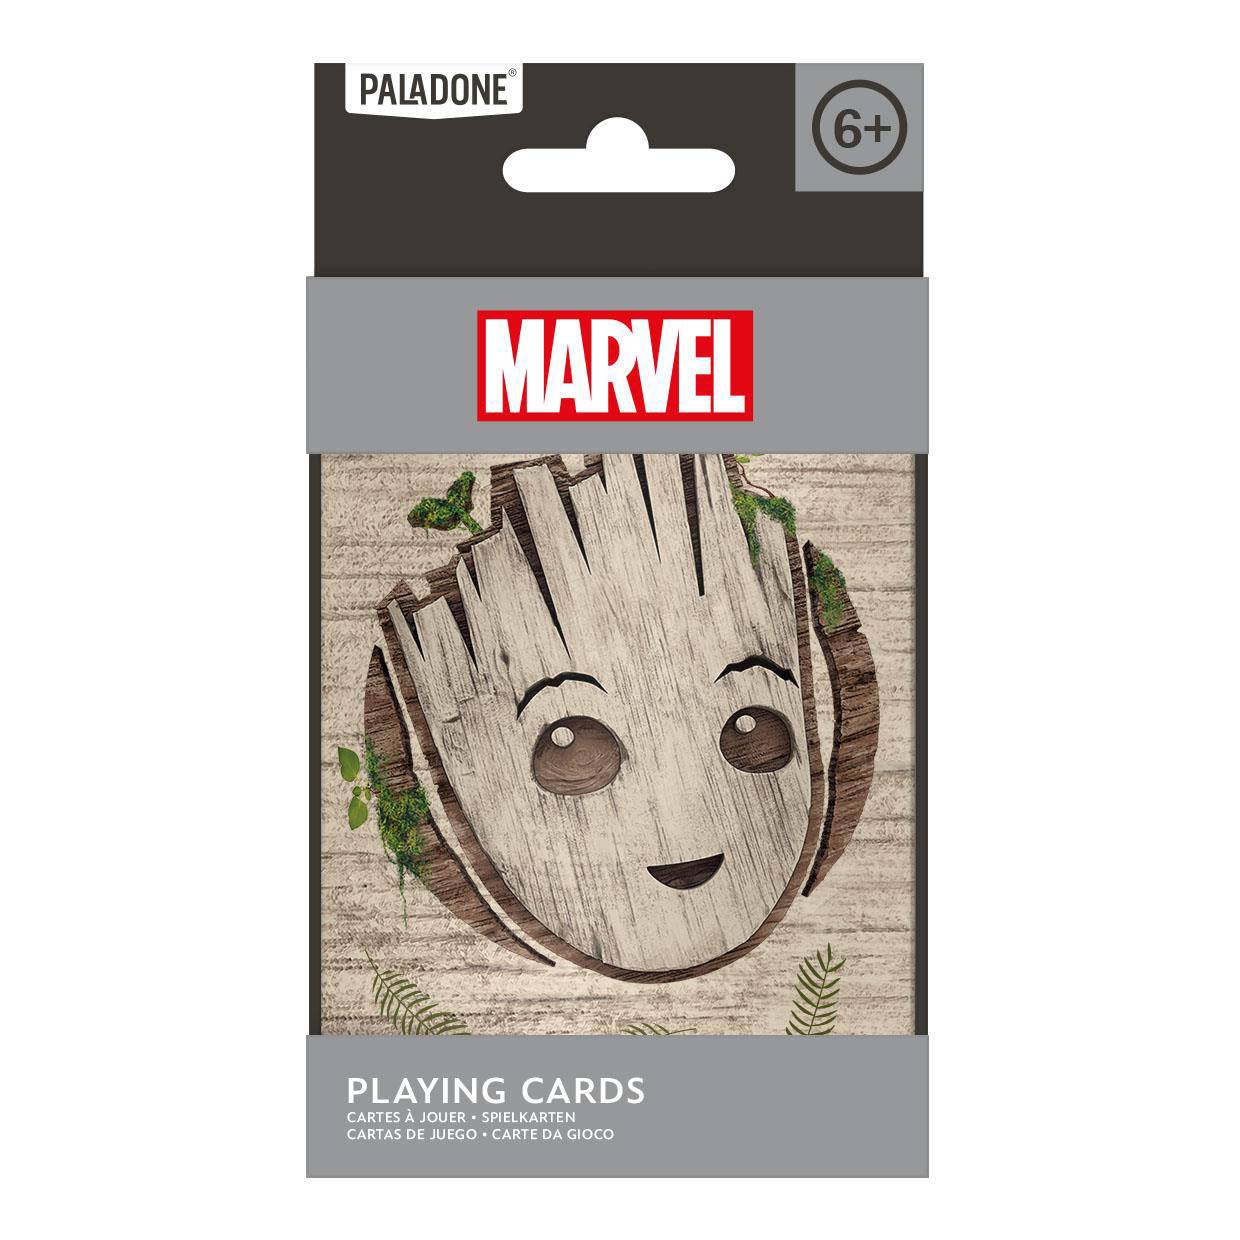 Jeu de Cartes Groot Les Gardiens de la Galaxie Marvel Paladone | Marvel jeu de cartes à jouer Groot Funko